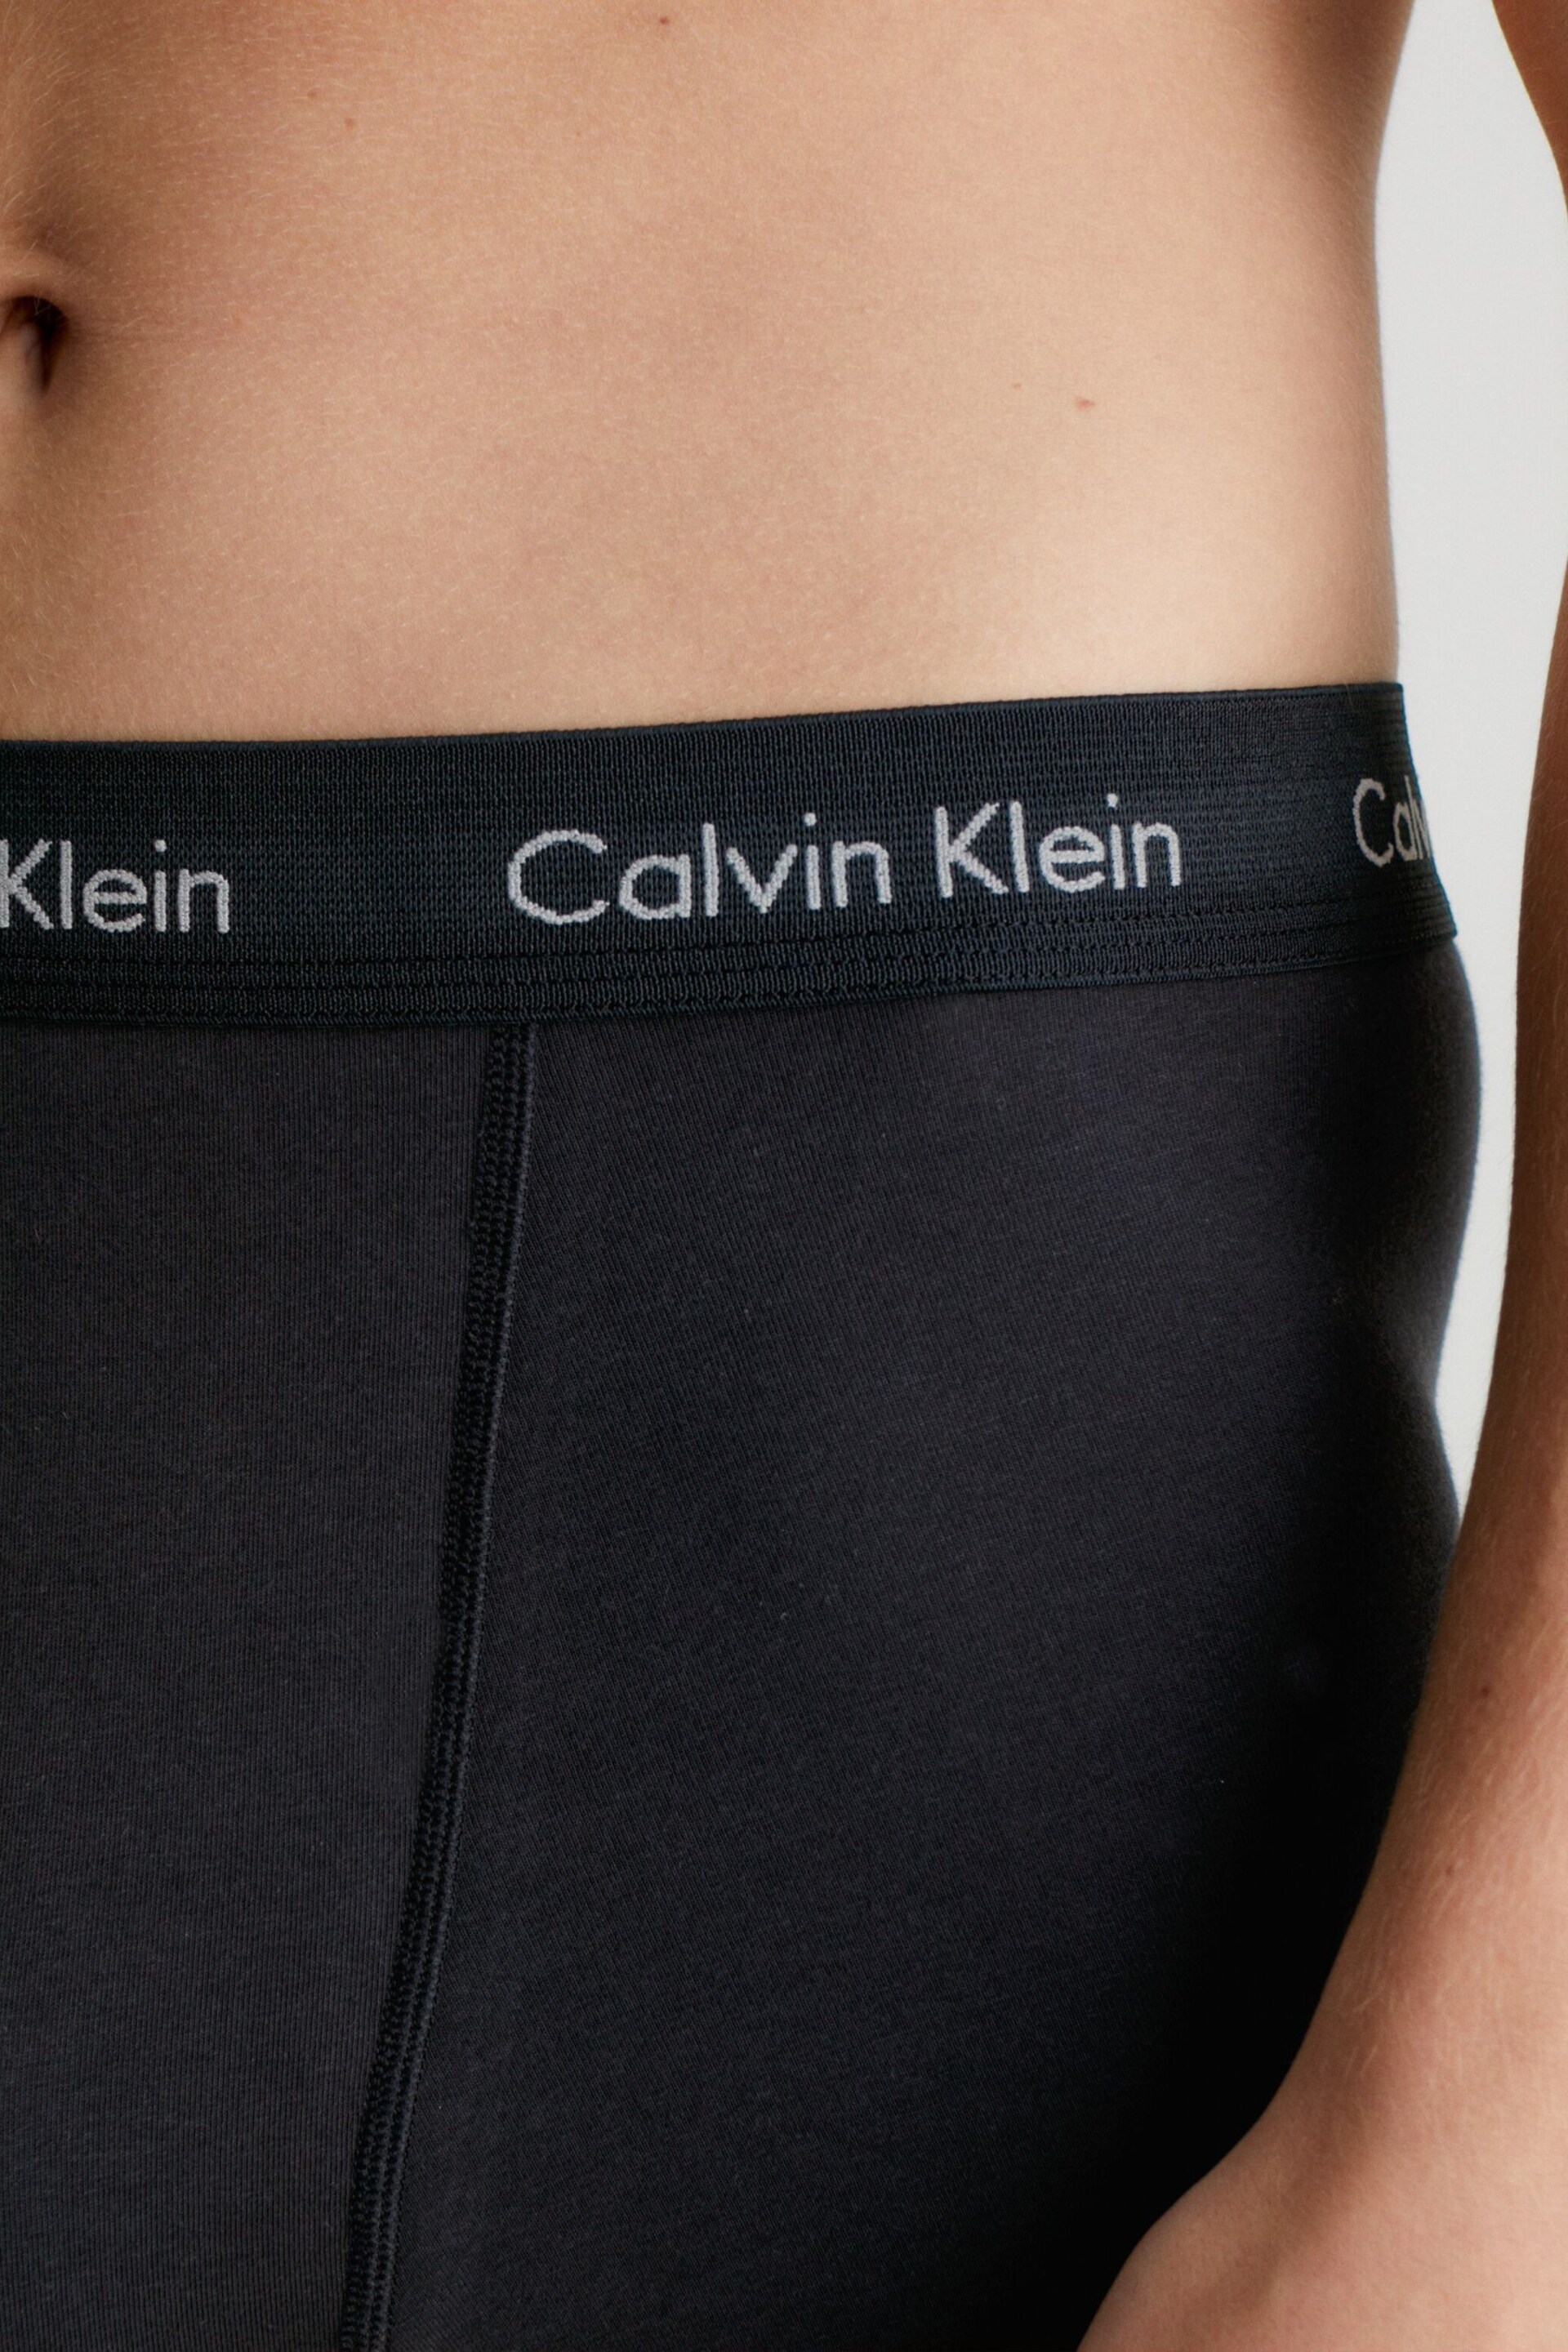 Calvin Klein Black Cotton Trunks 3 Pack - Image 4 of 4